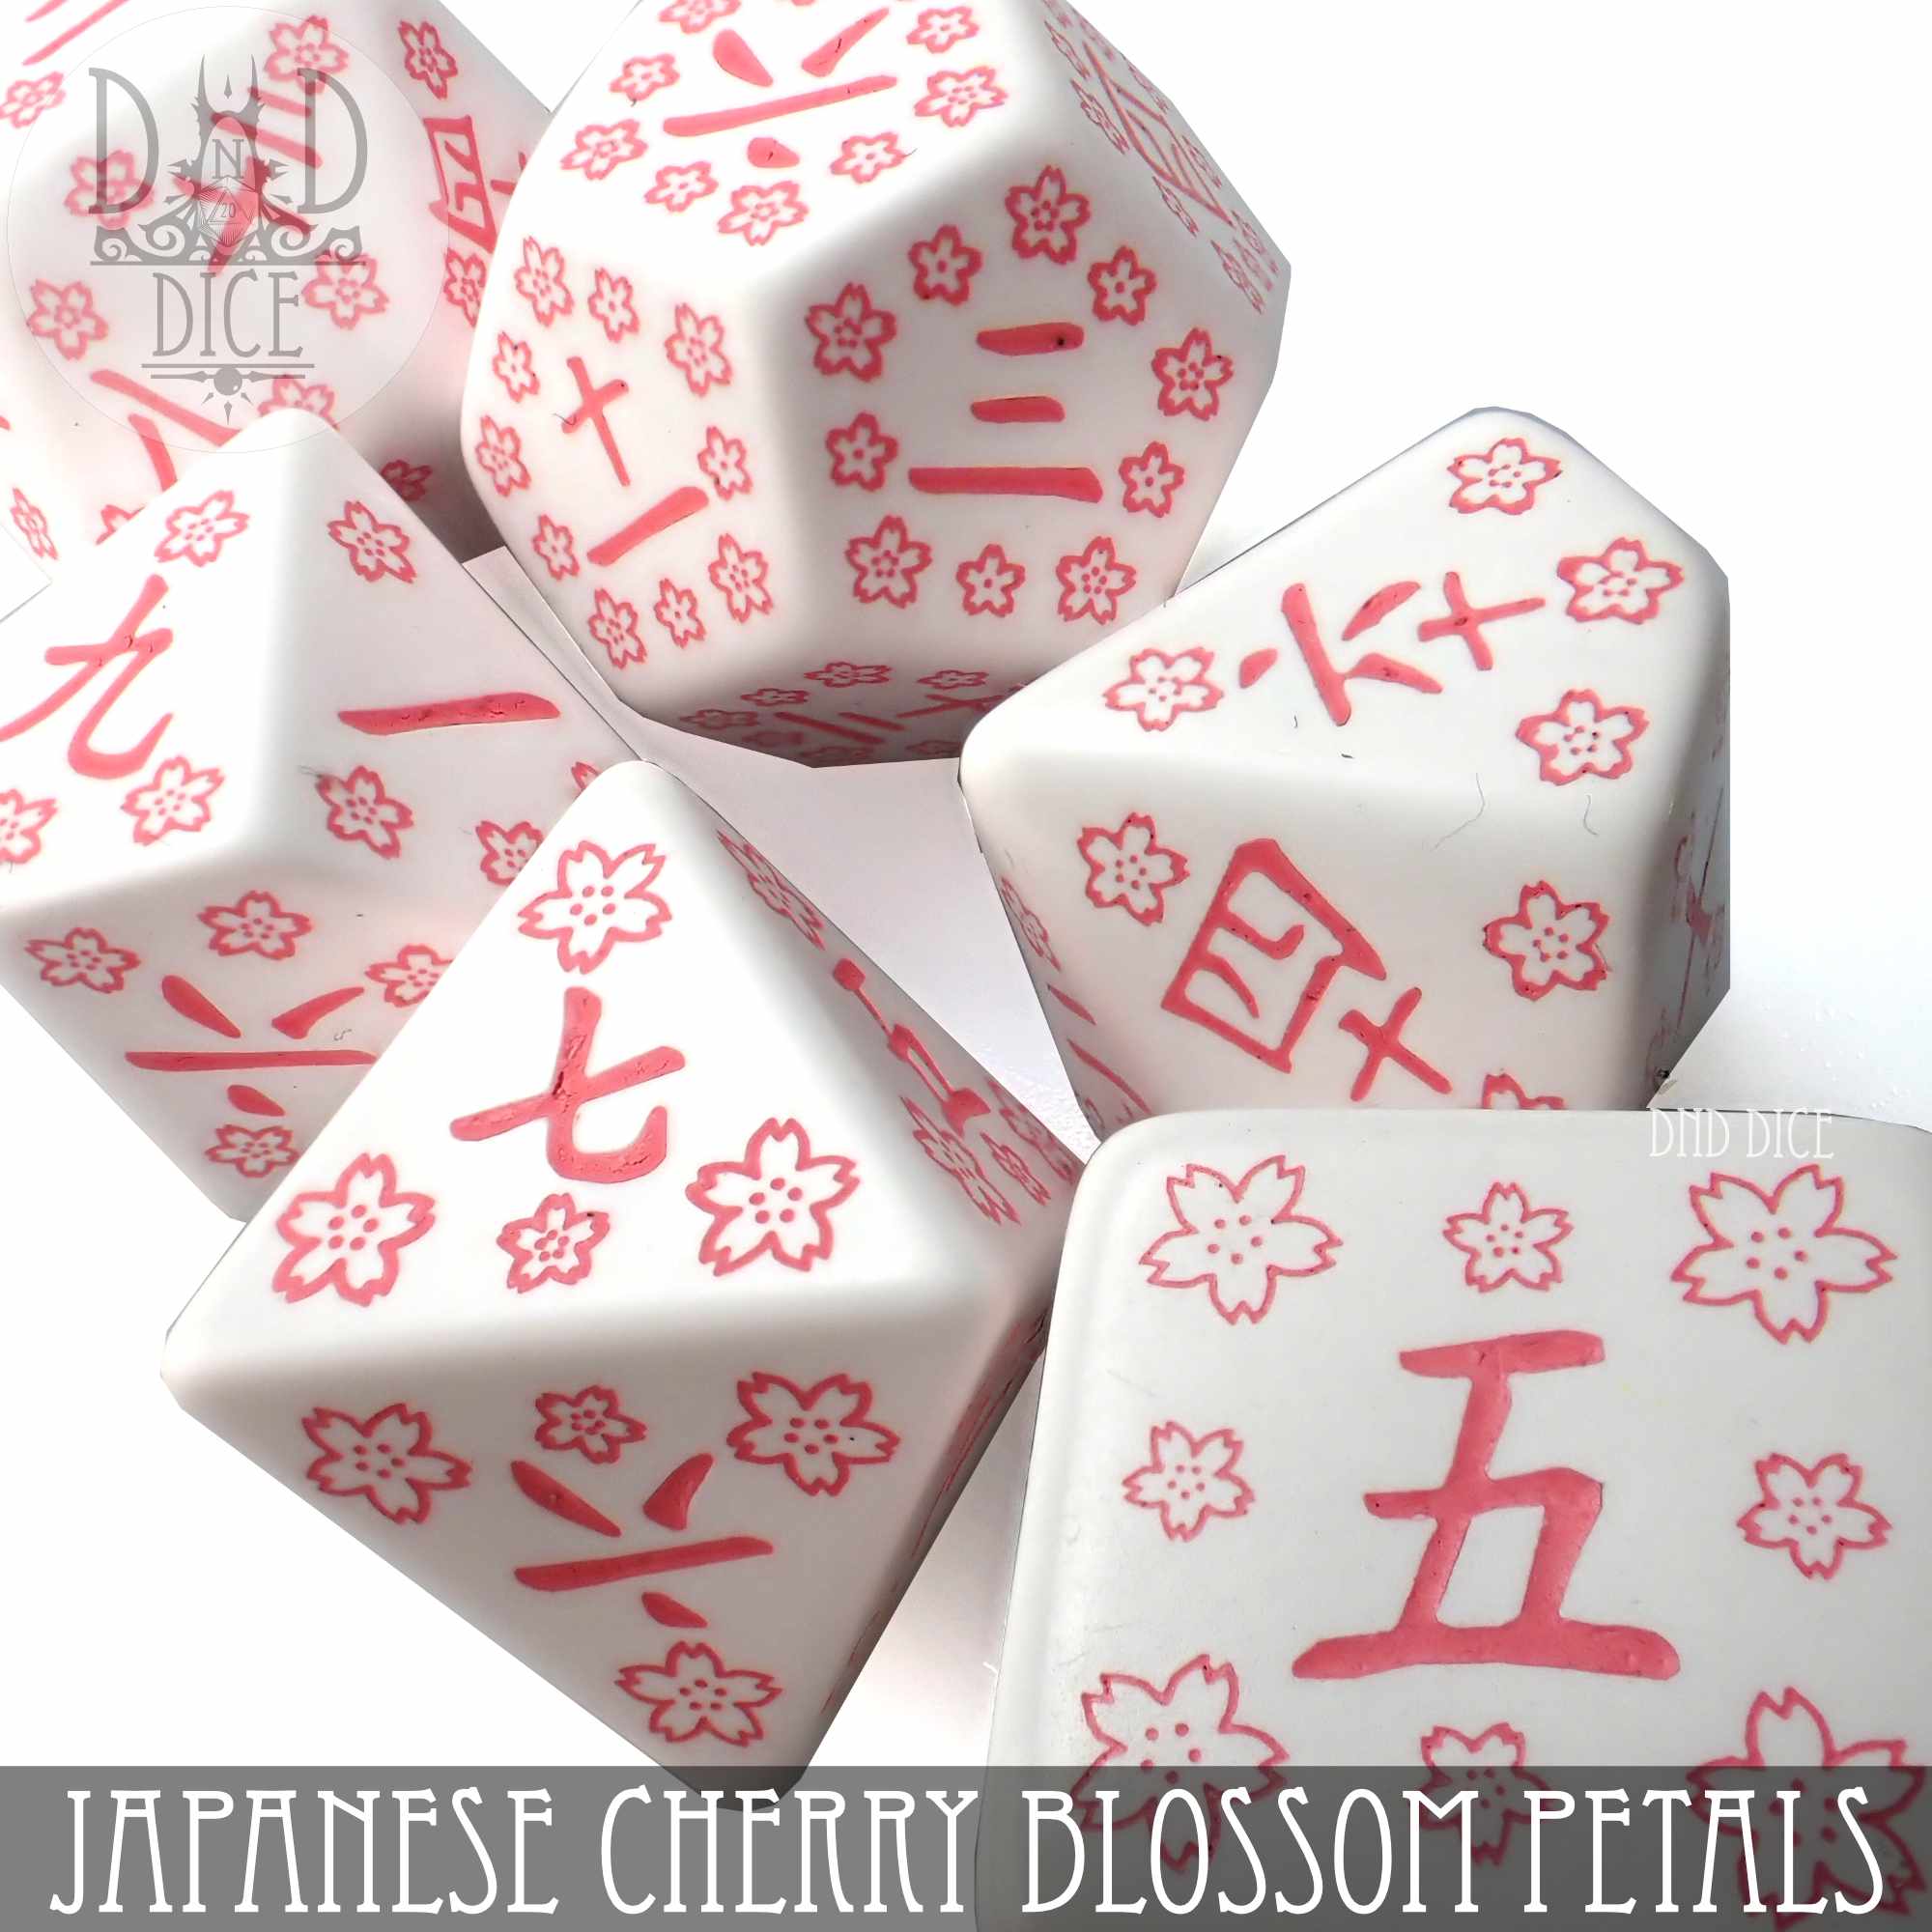 Japanese Cherry Blossom Petals